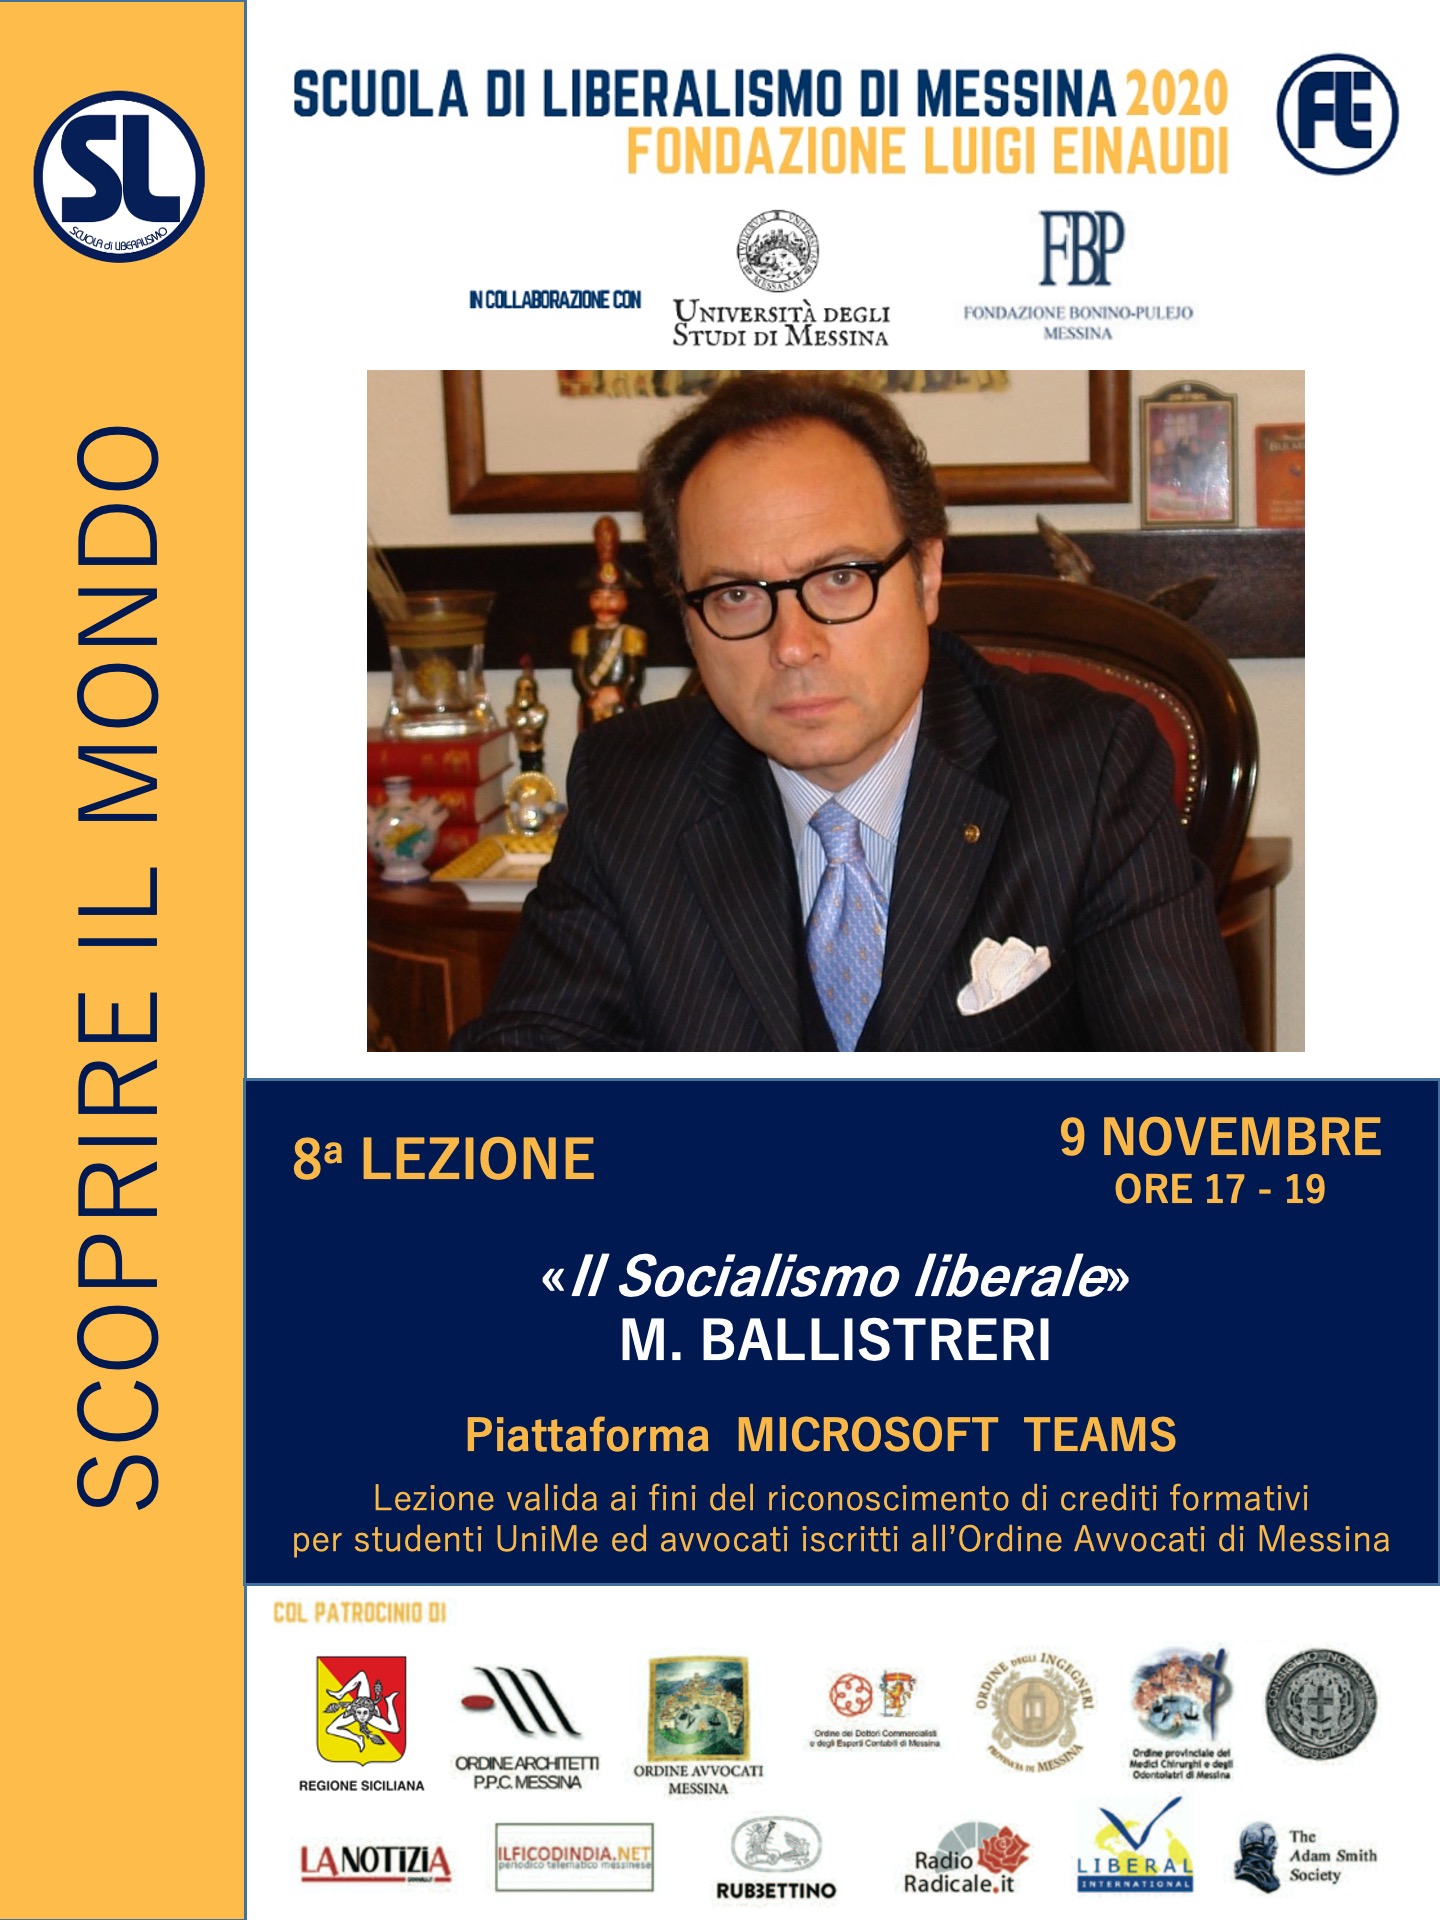 Messina, November 9, 2020. School of Liberalism: Maurizio Ballistreri gives the lecture